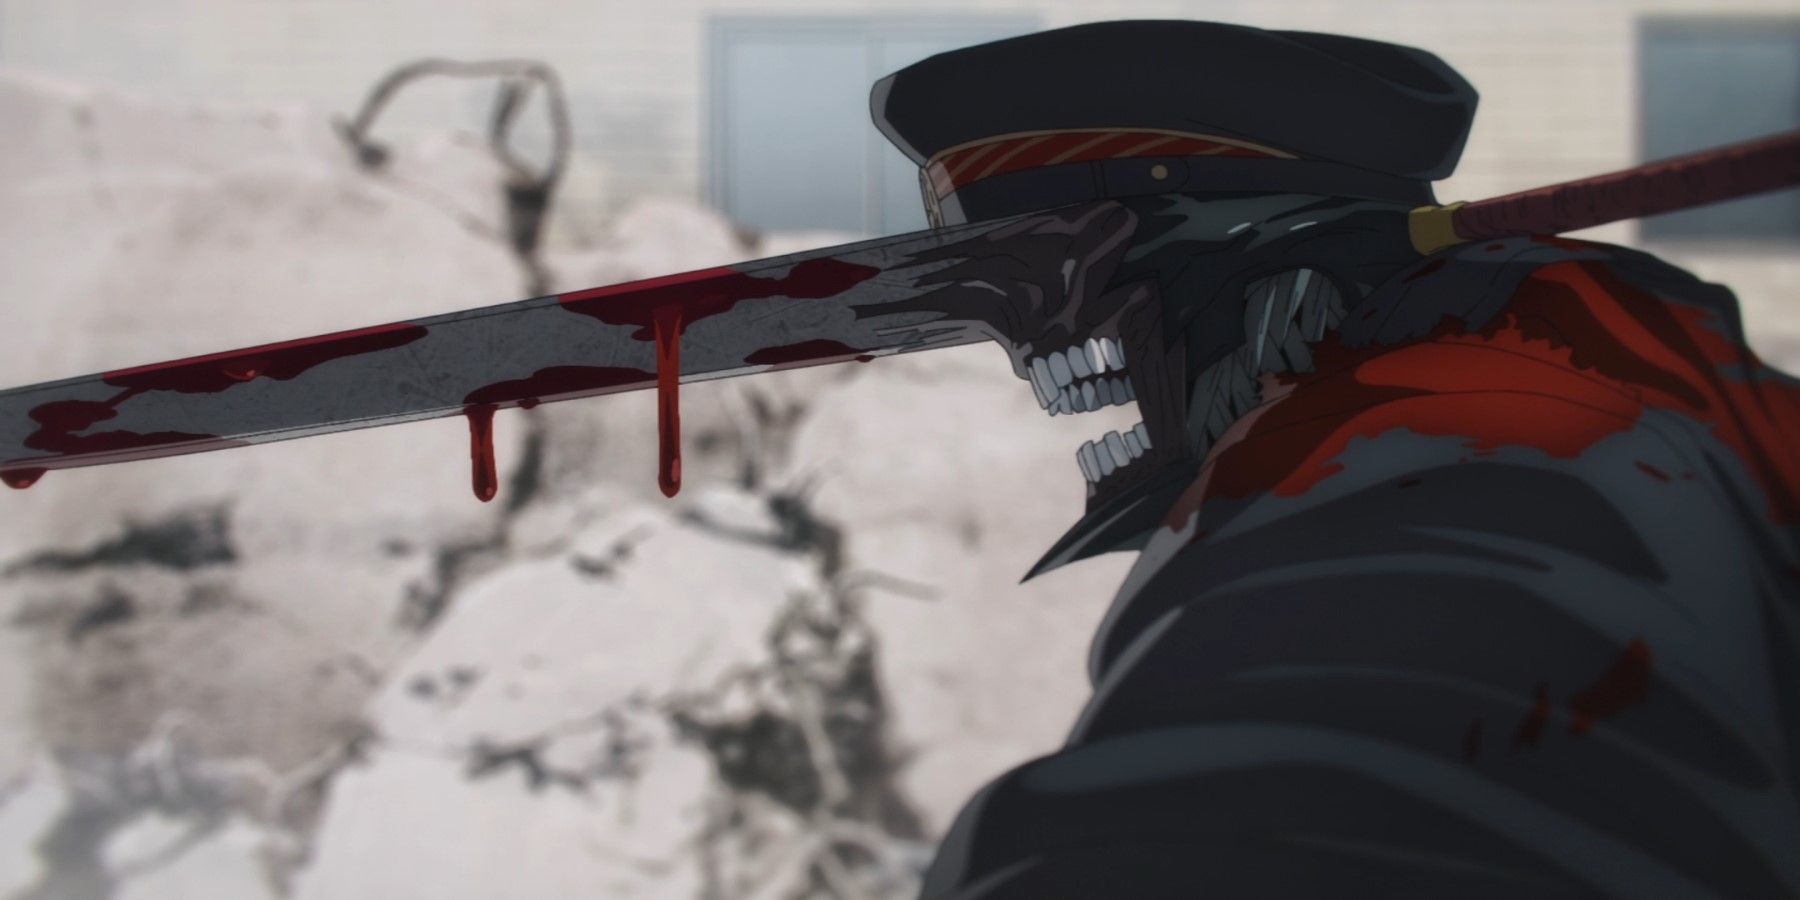 Katana Man's bloodied blade